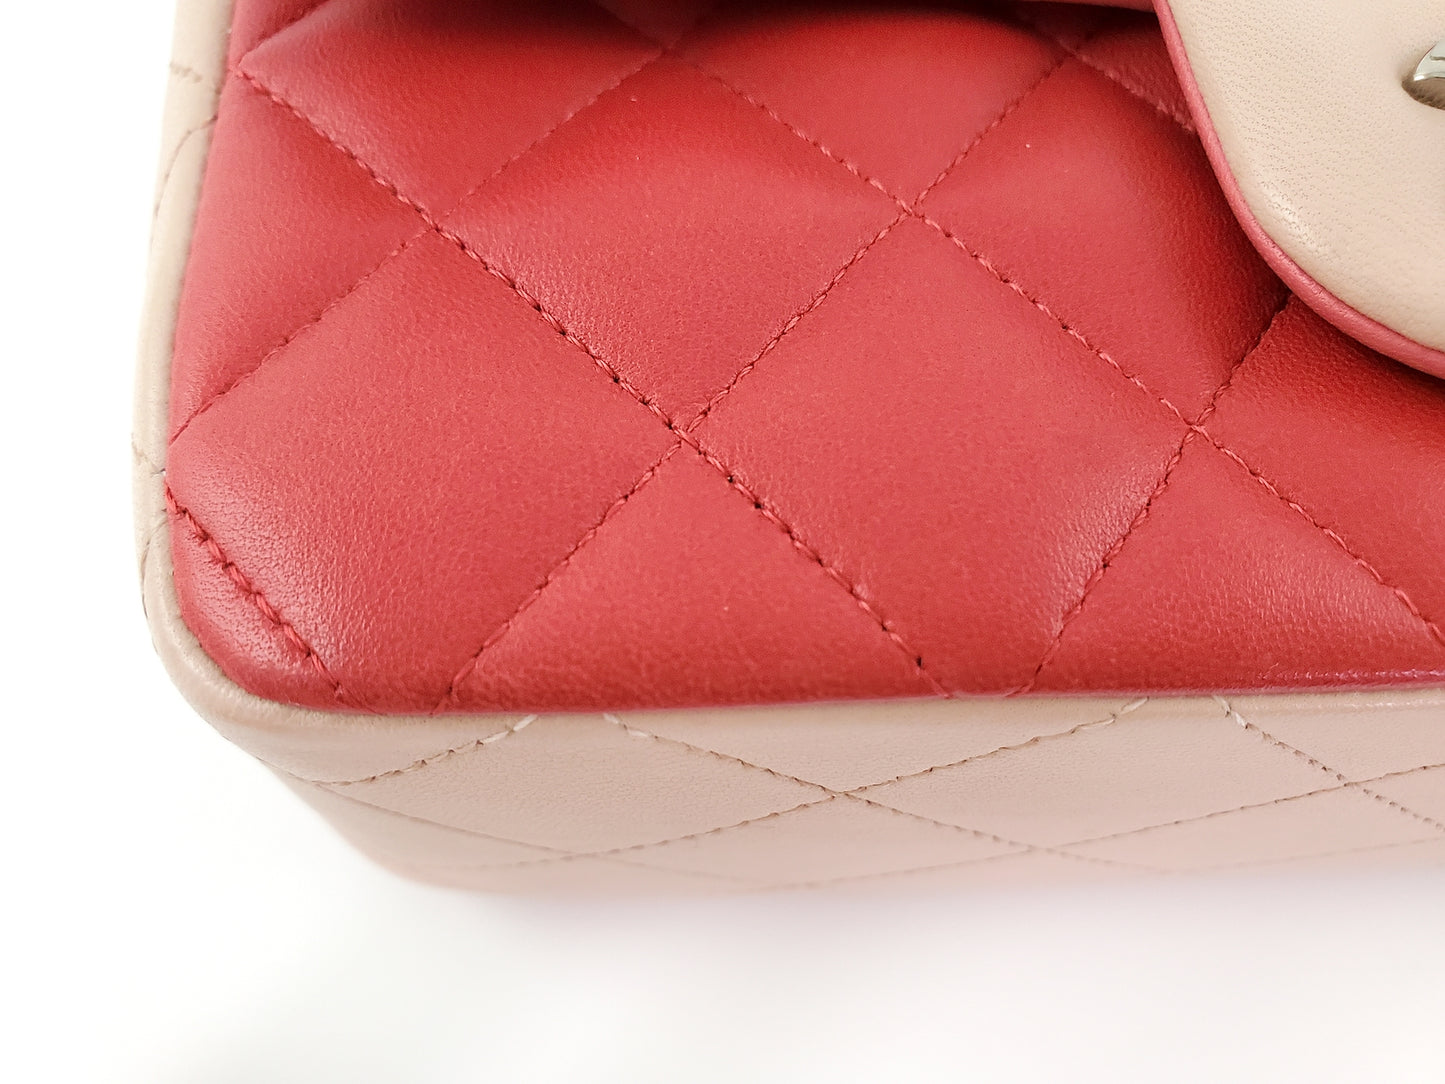 CHANEL Rectangular Mini Valentine Charm Tri-color Pink Flap Bag